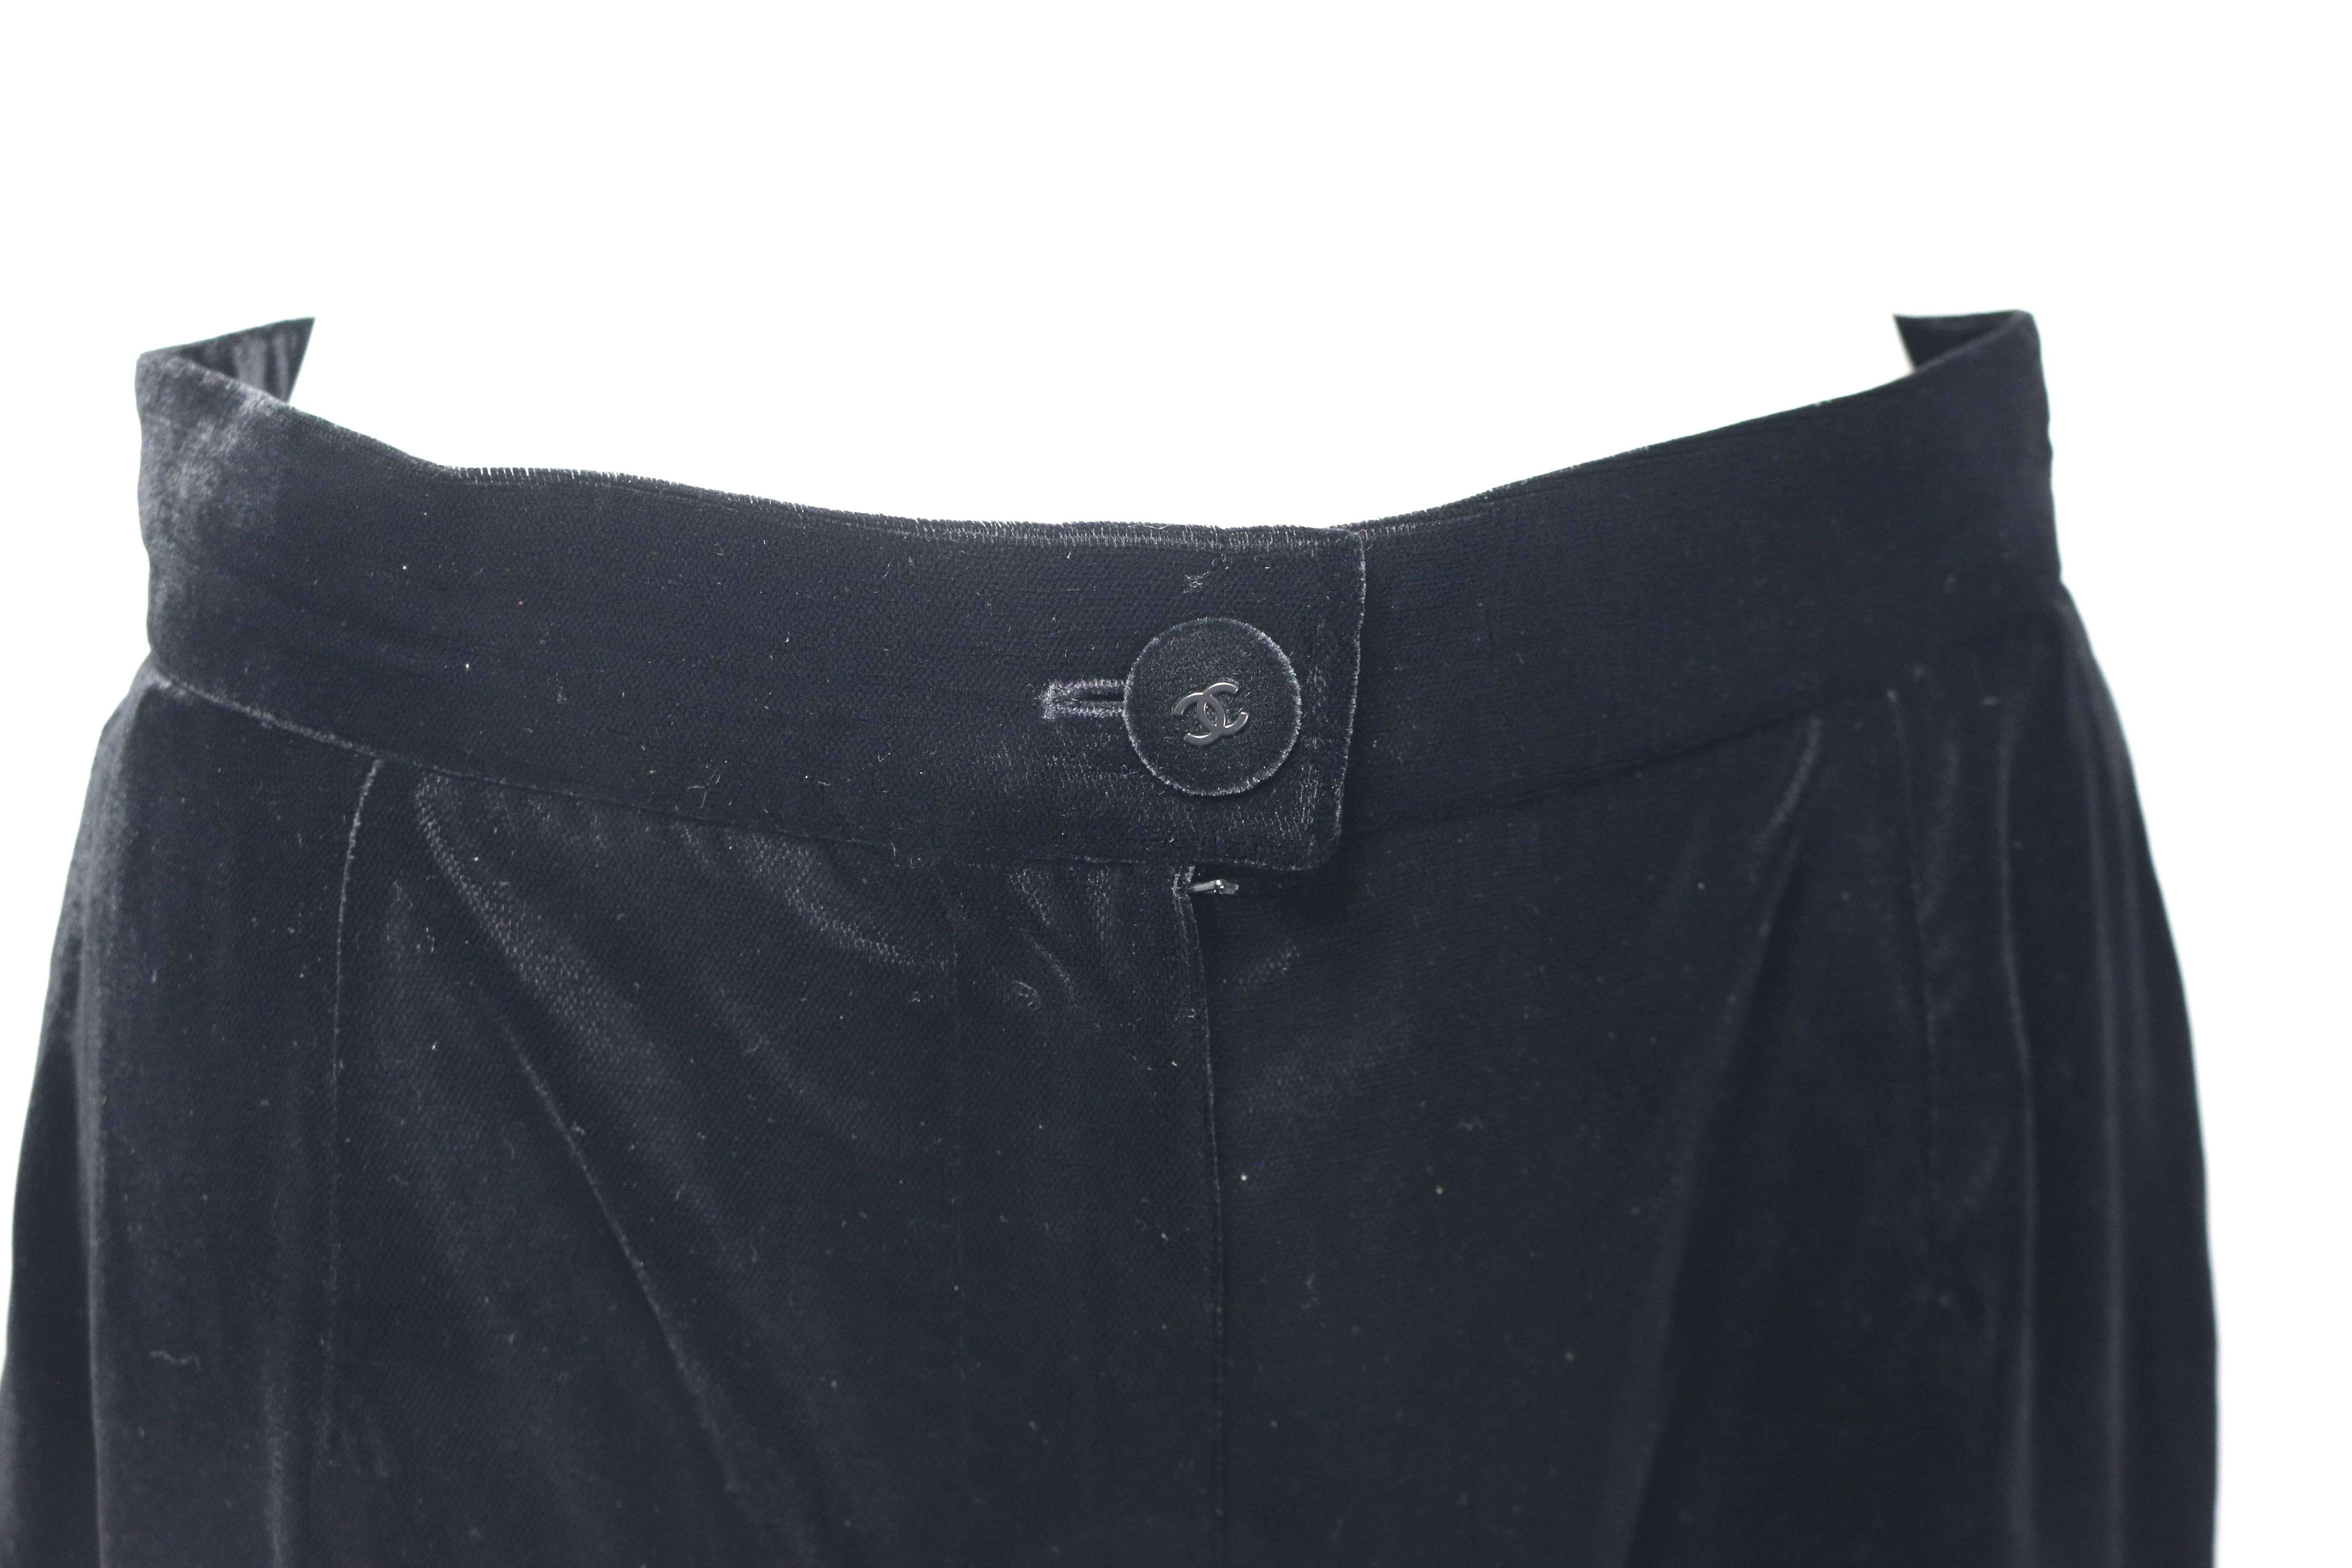 - Vintage Chanel black velvet pants from 1998 A/W collection. 

- Wild legs cutting. 

- Black velvet 